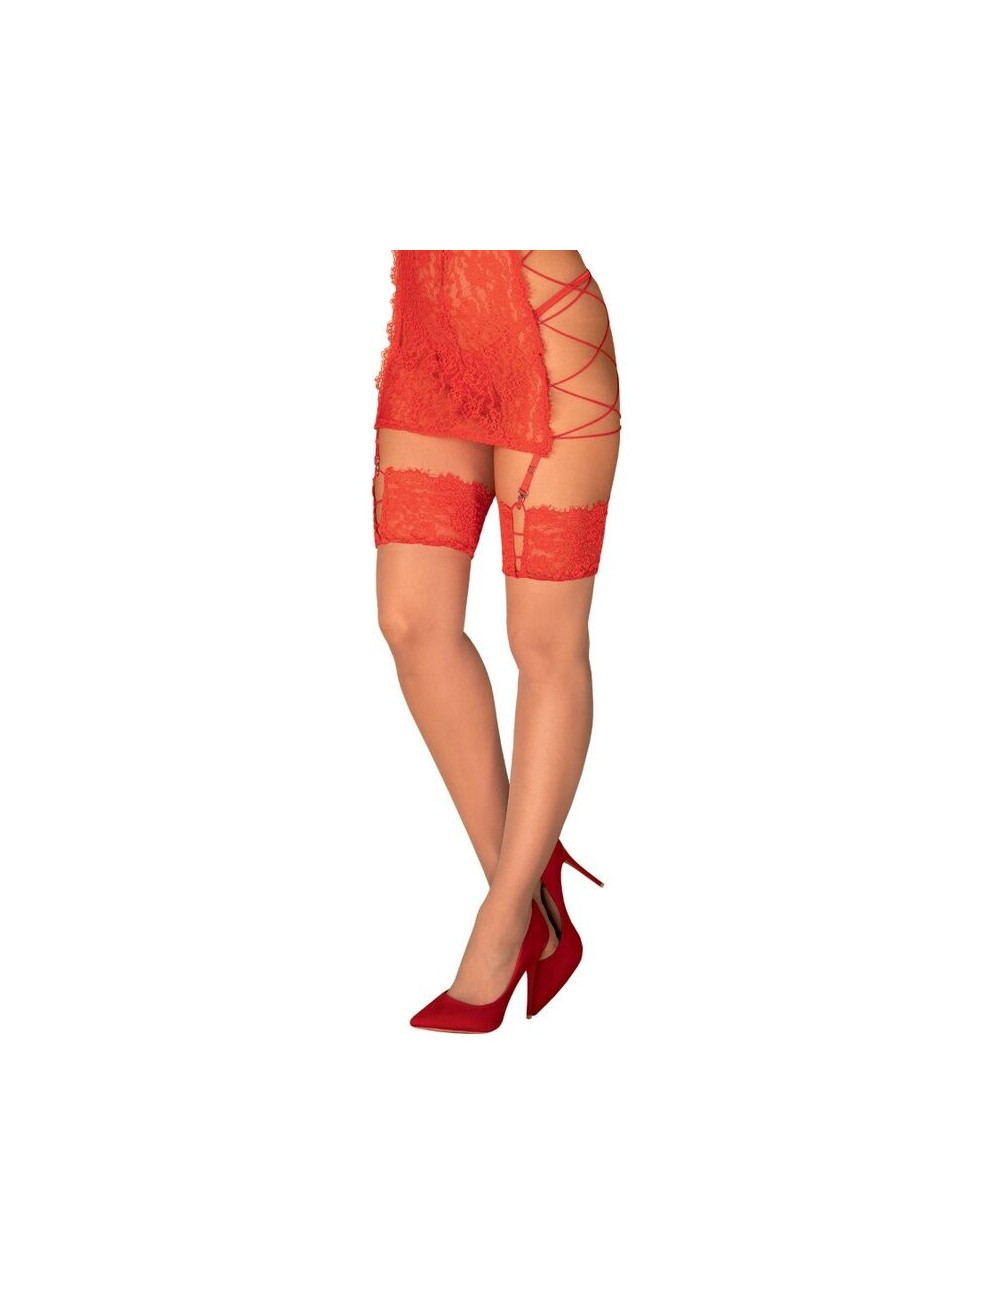 Lingerie - Collants - OBSESSIVE - BAS REDIOSA L/XL - Obsessive Garter & Stockings